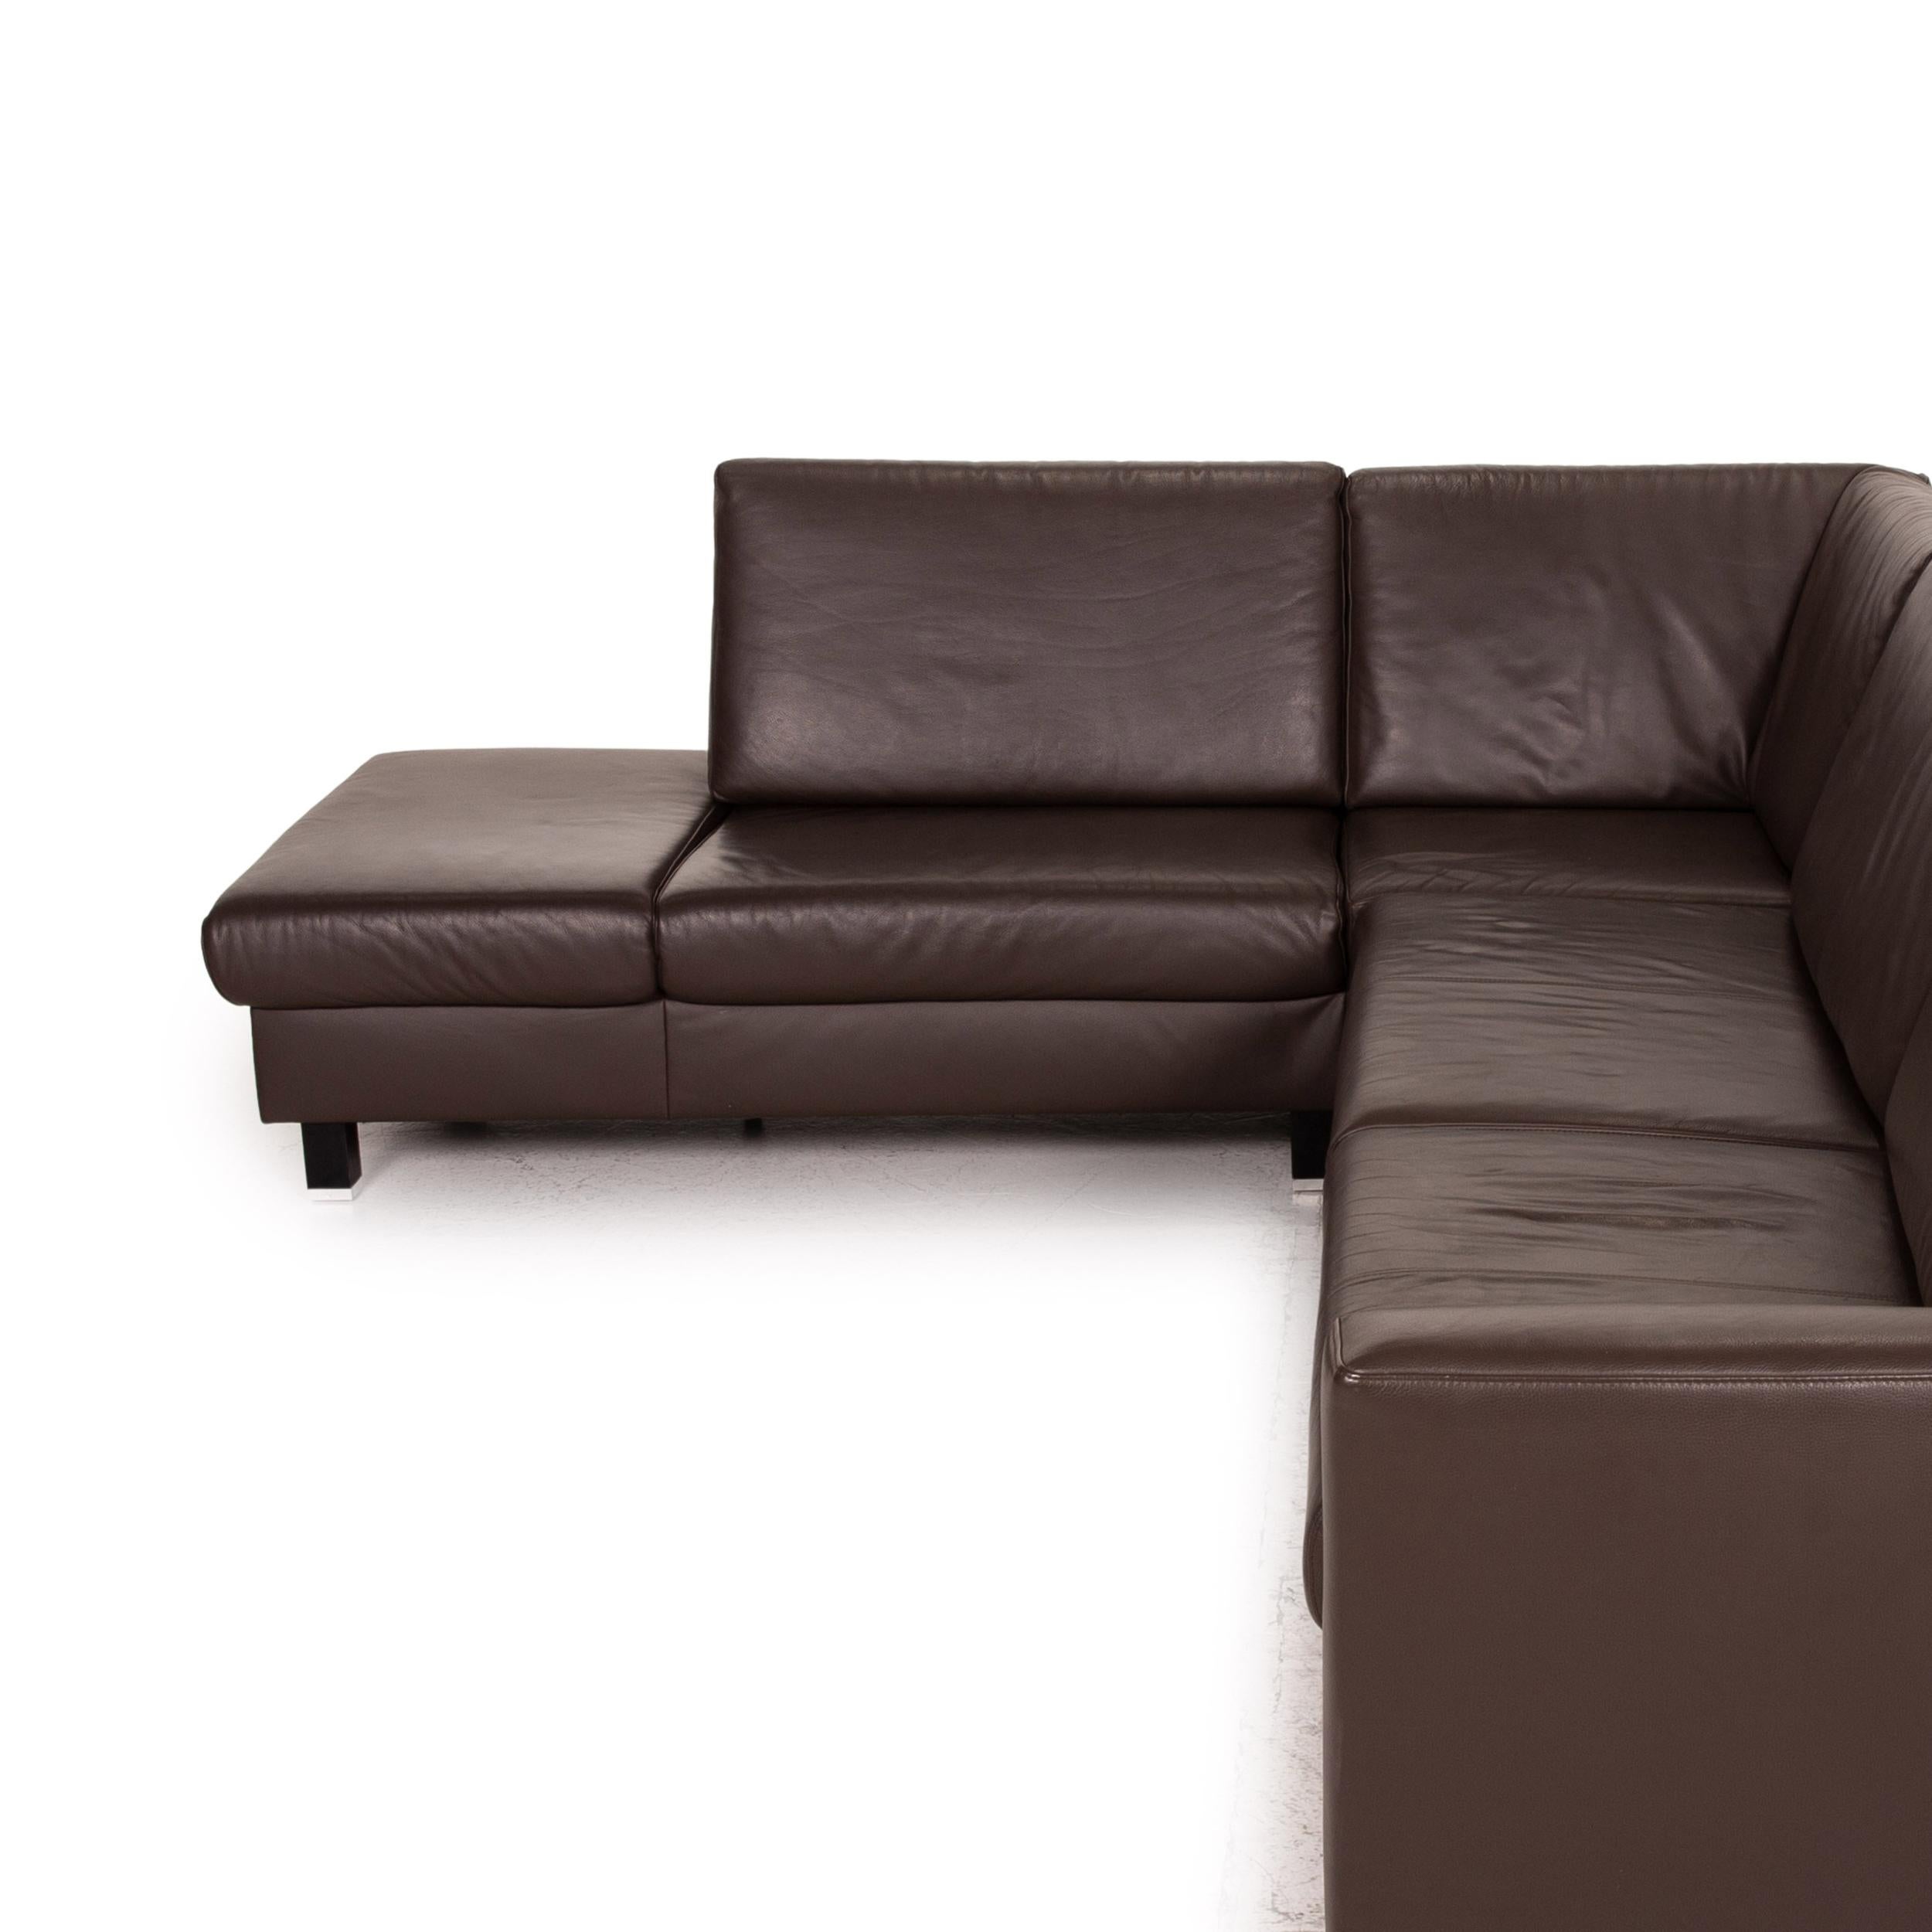 Contemporary Ewald Schillig Flex Plus Leather Corner Sofa Brown Dark Brown Sofa Couch For Sale